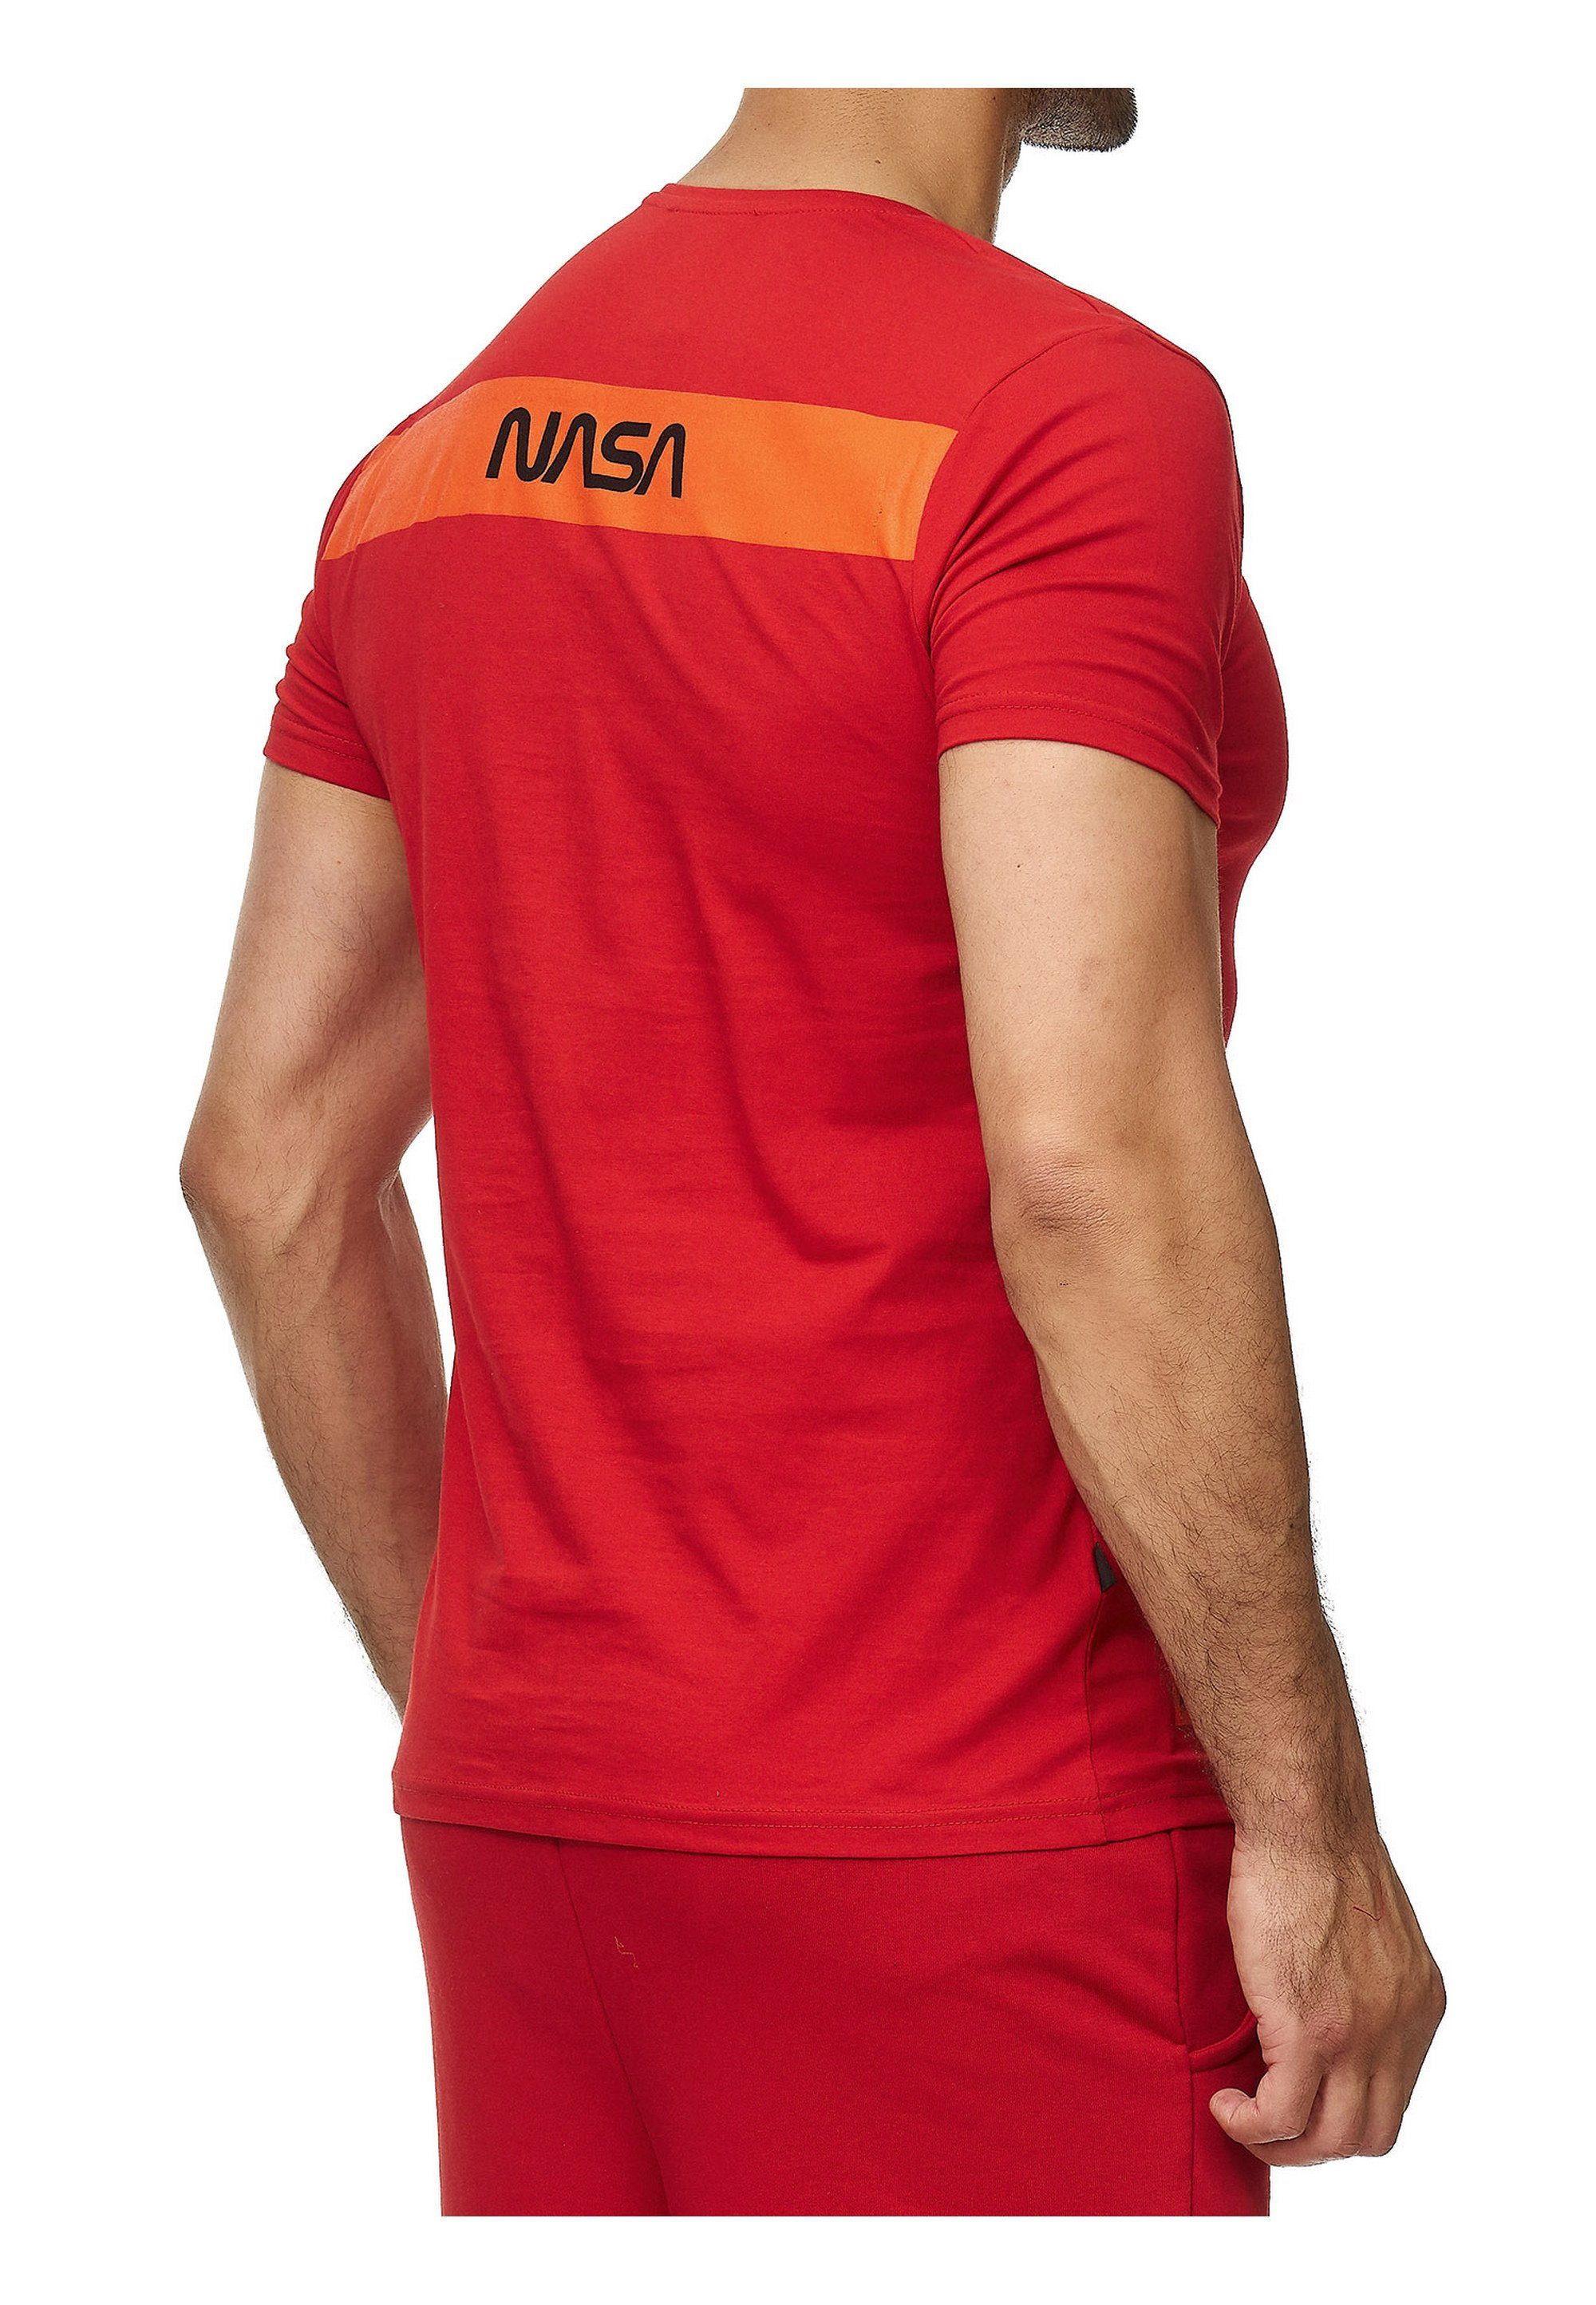 RedBridge T-Shirt Tucson mit gesticktem NASA-Design rot